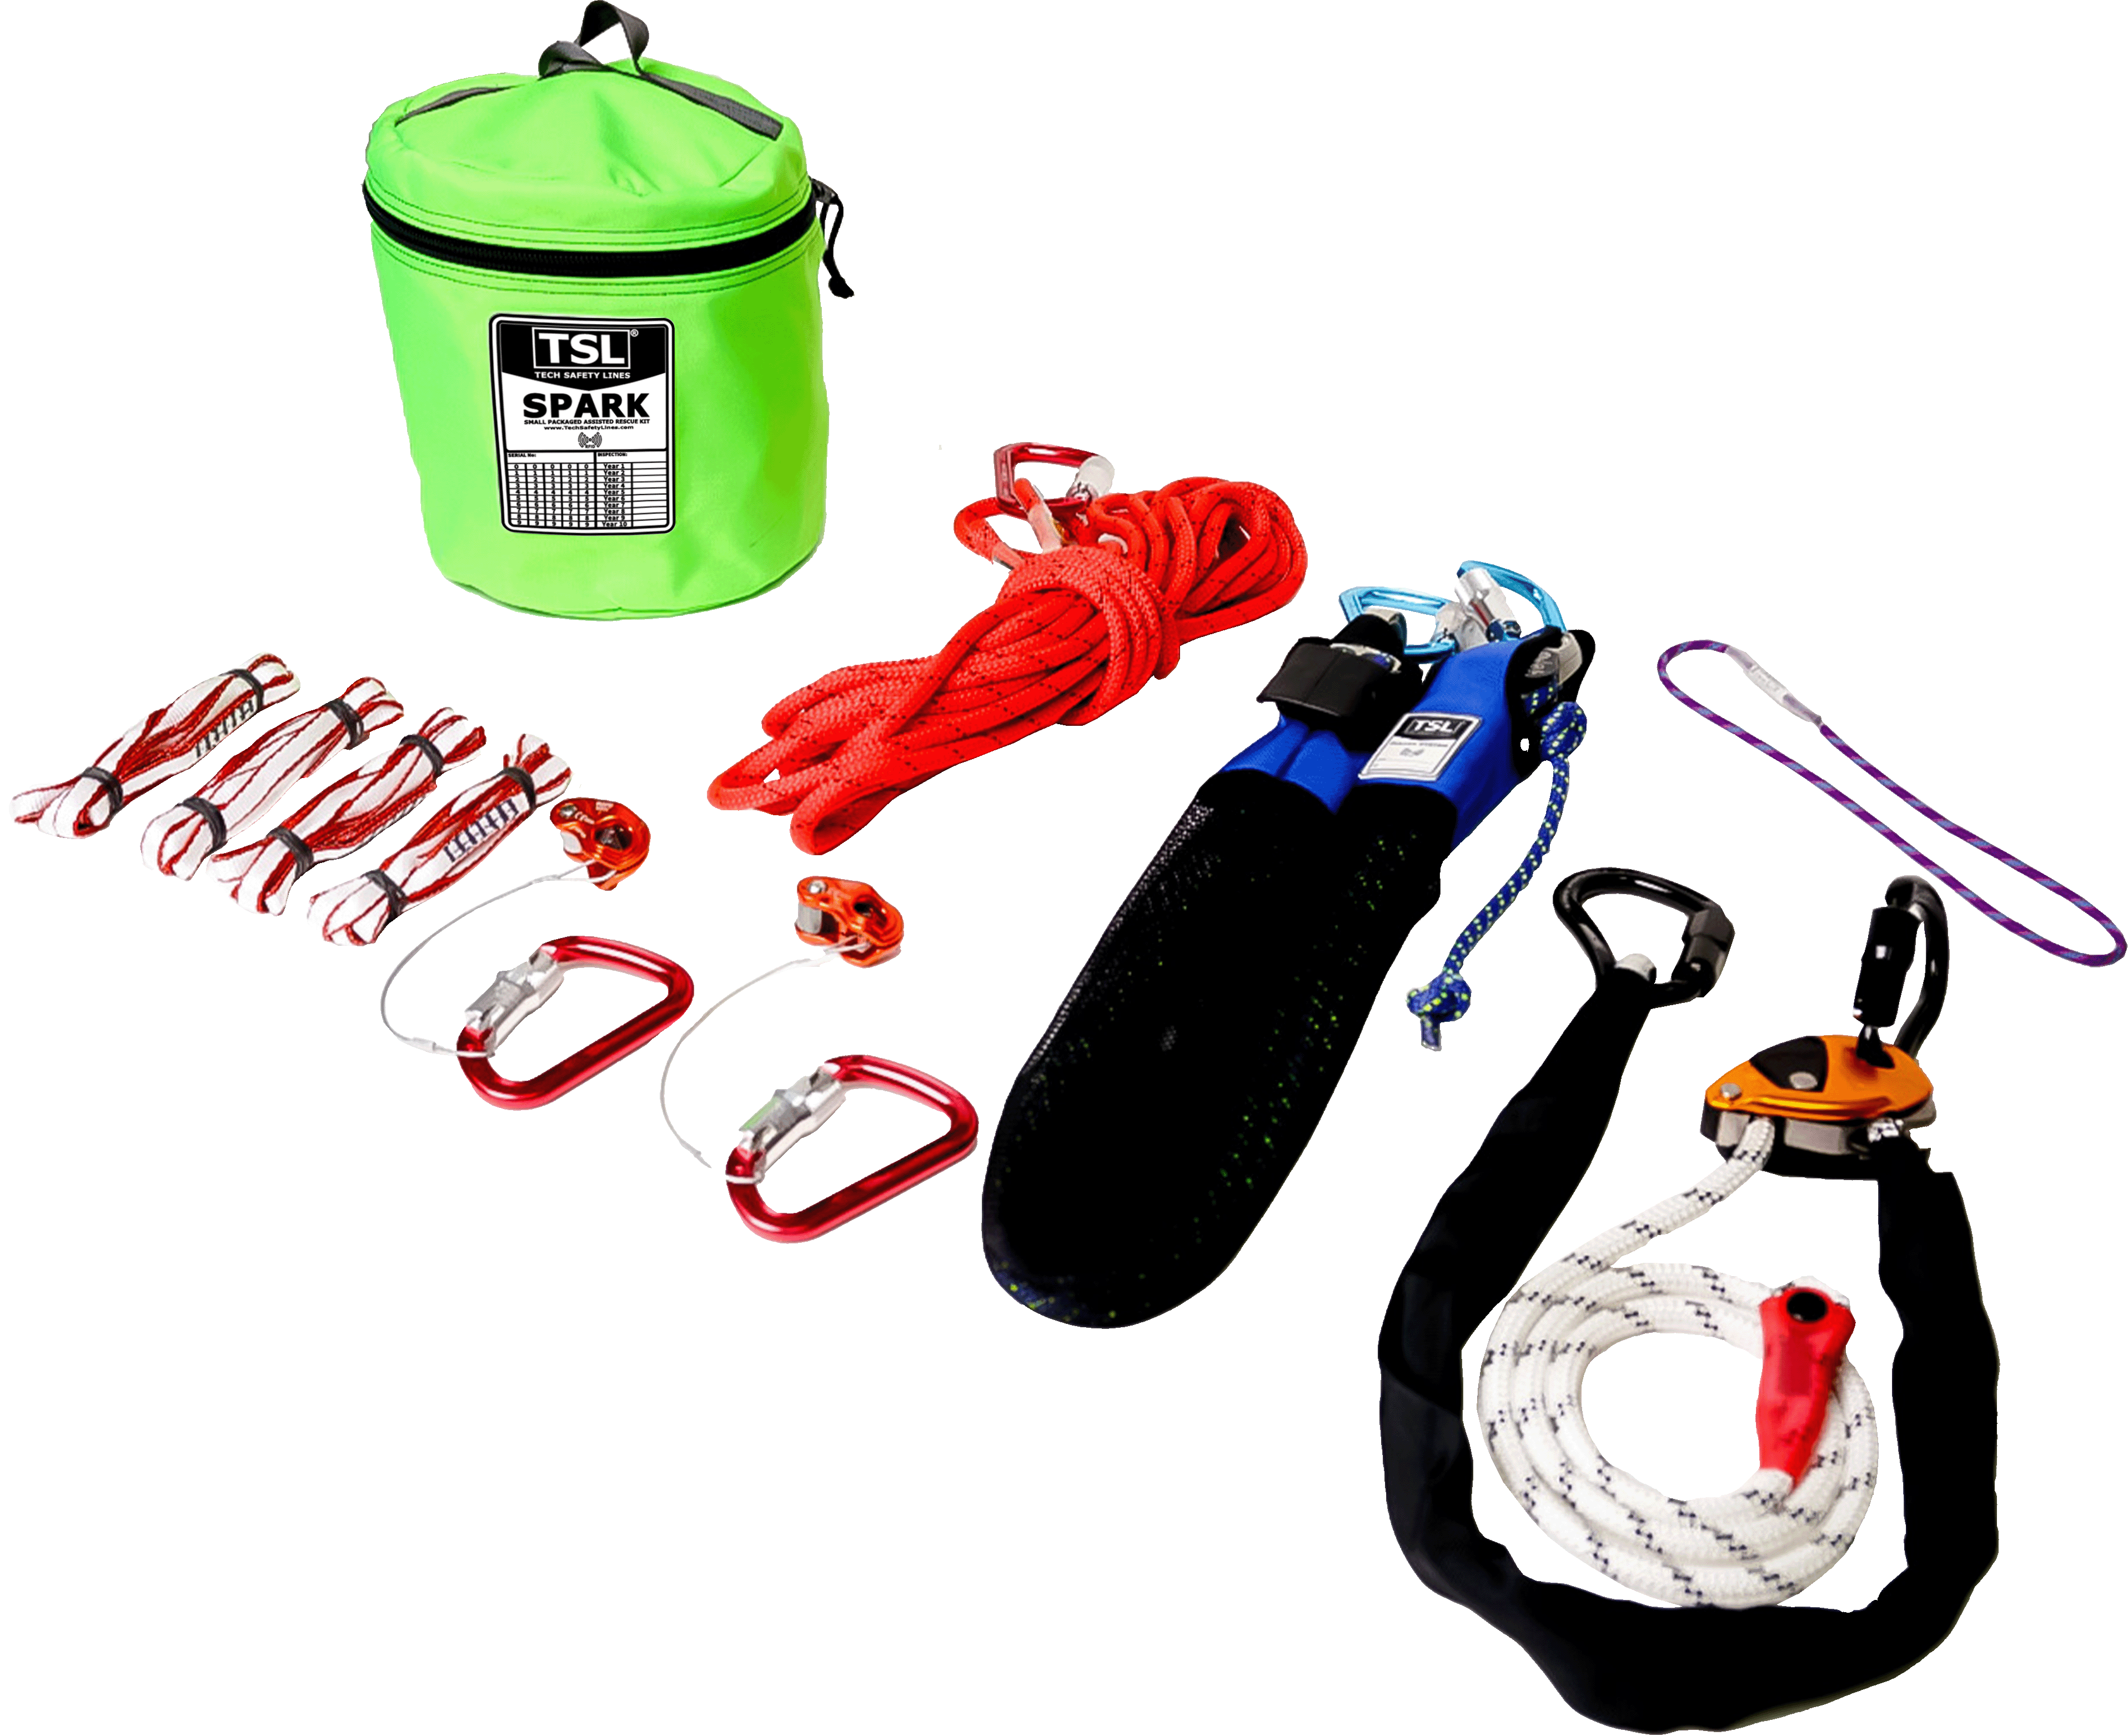 SPARK items kit